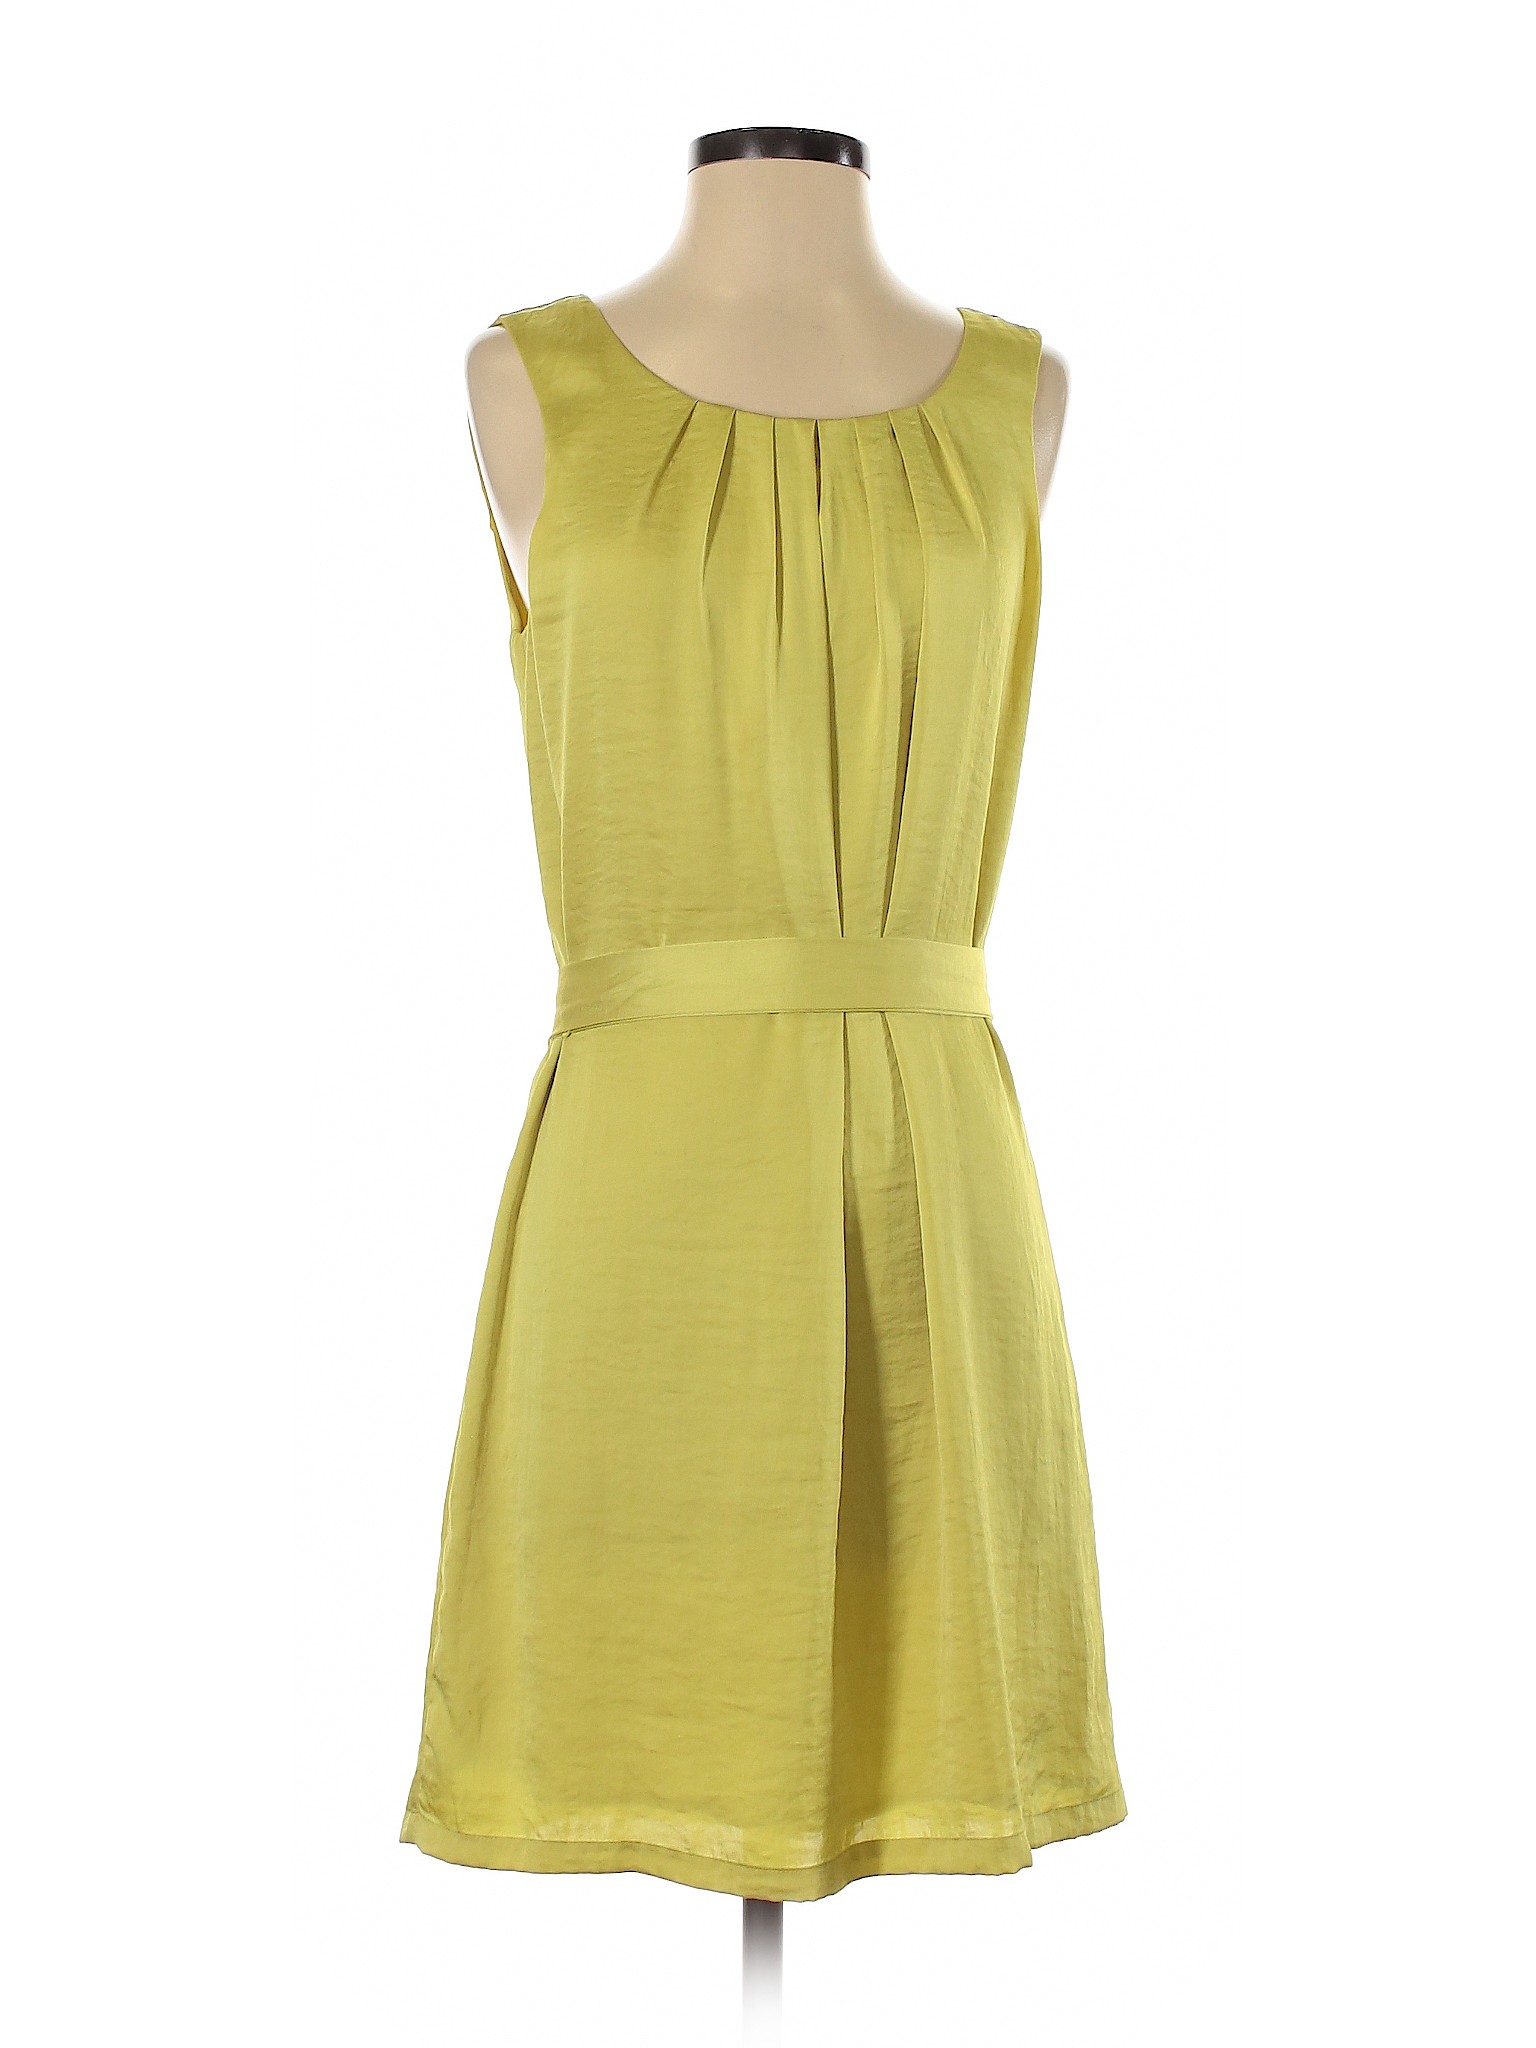 J.Crew Women Yellow Casual Dress 6 | eBay